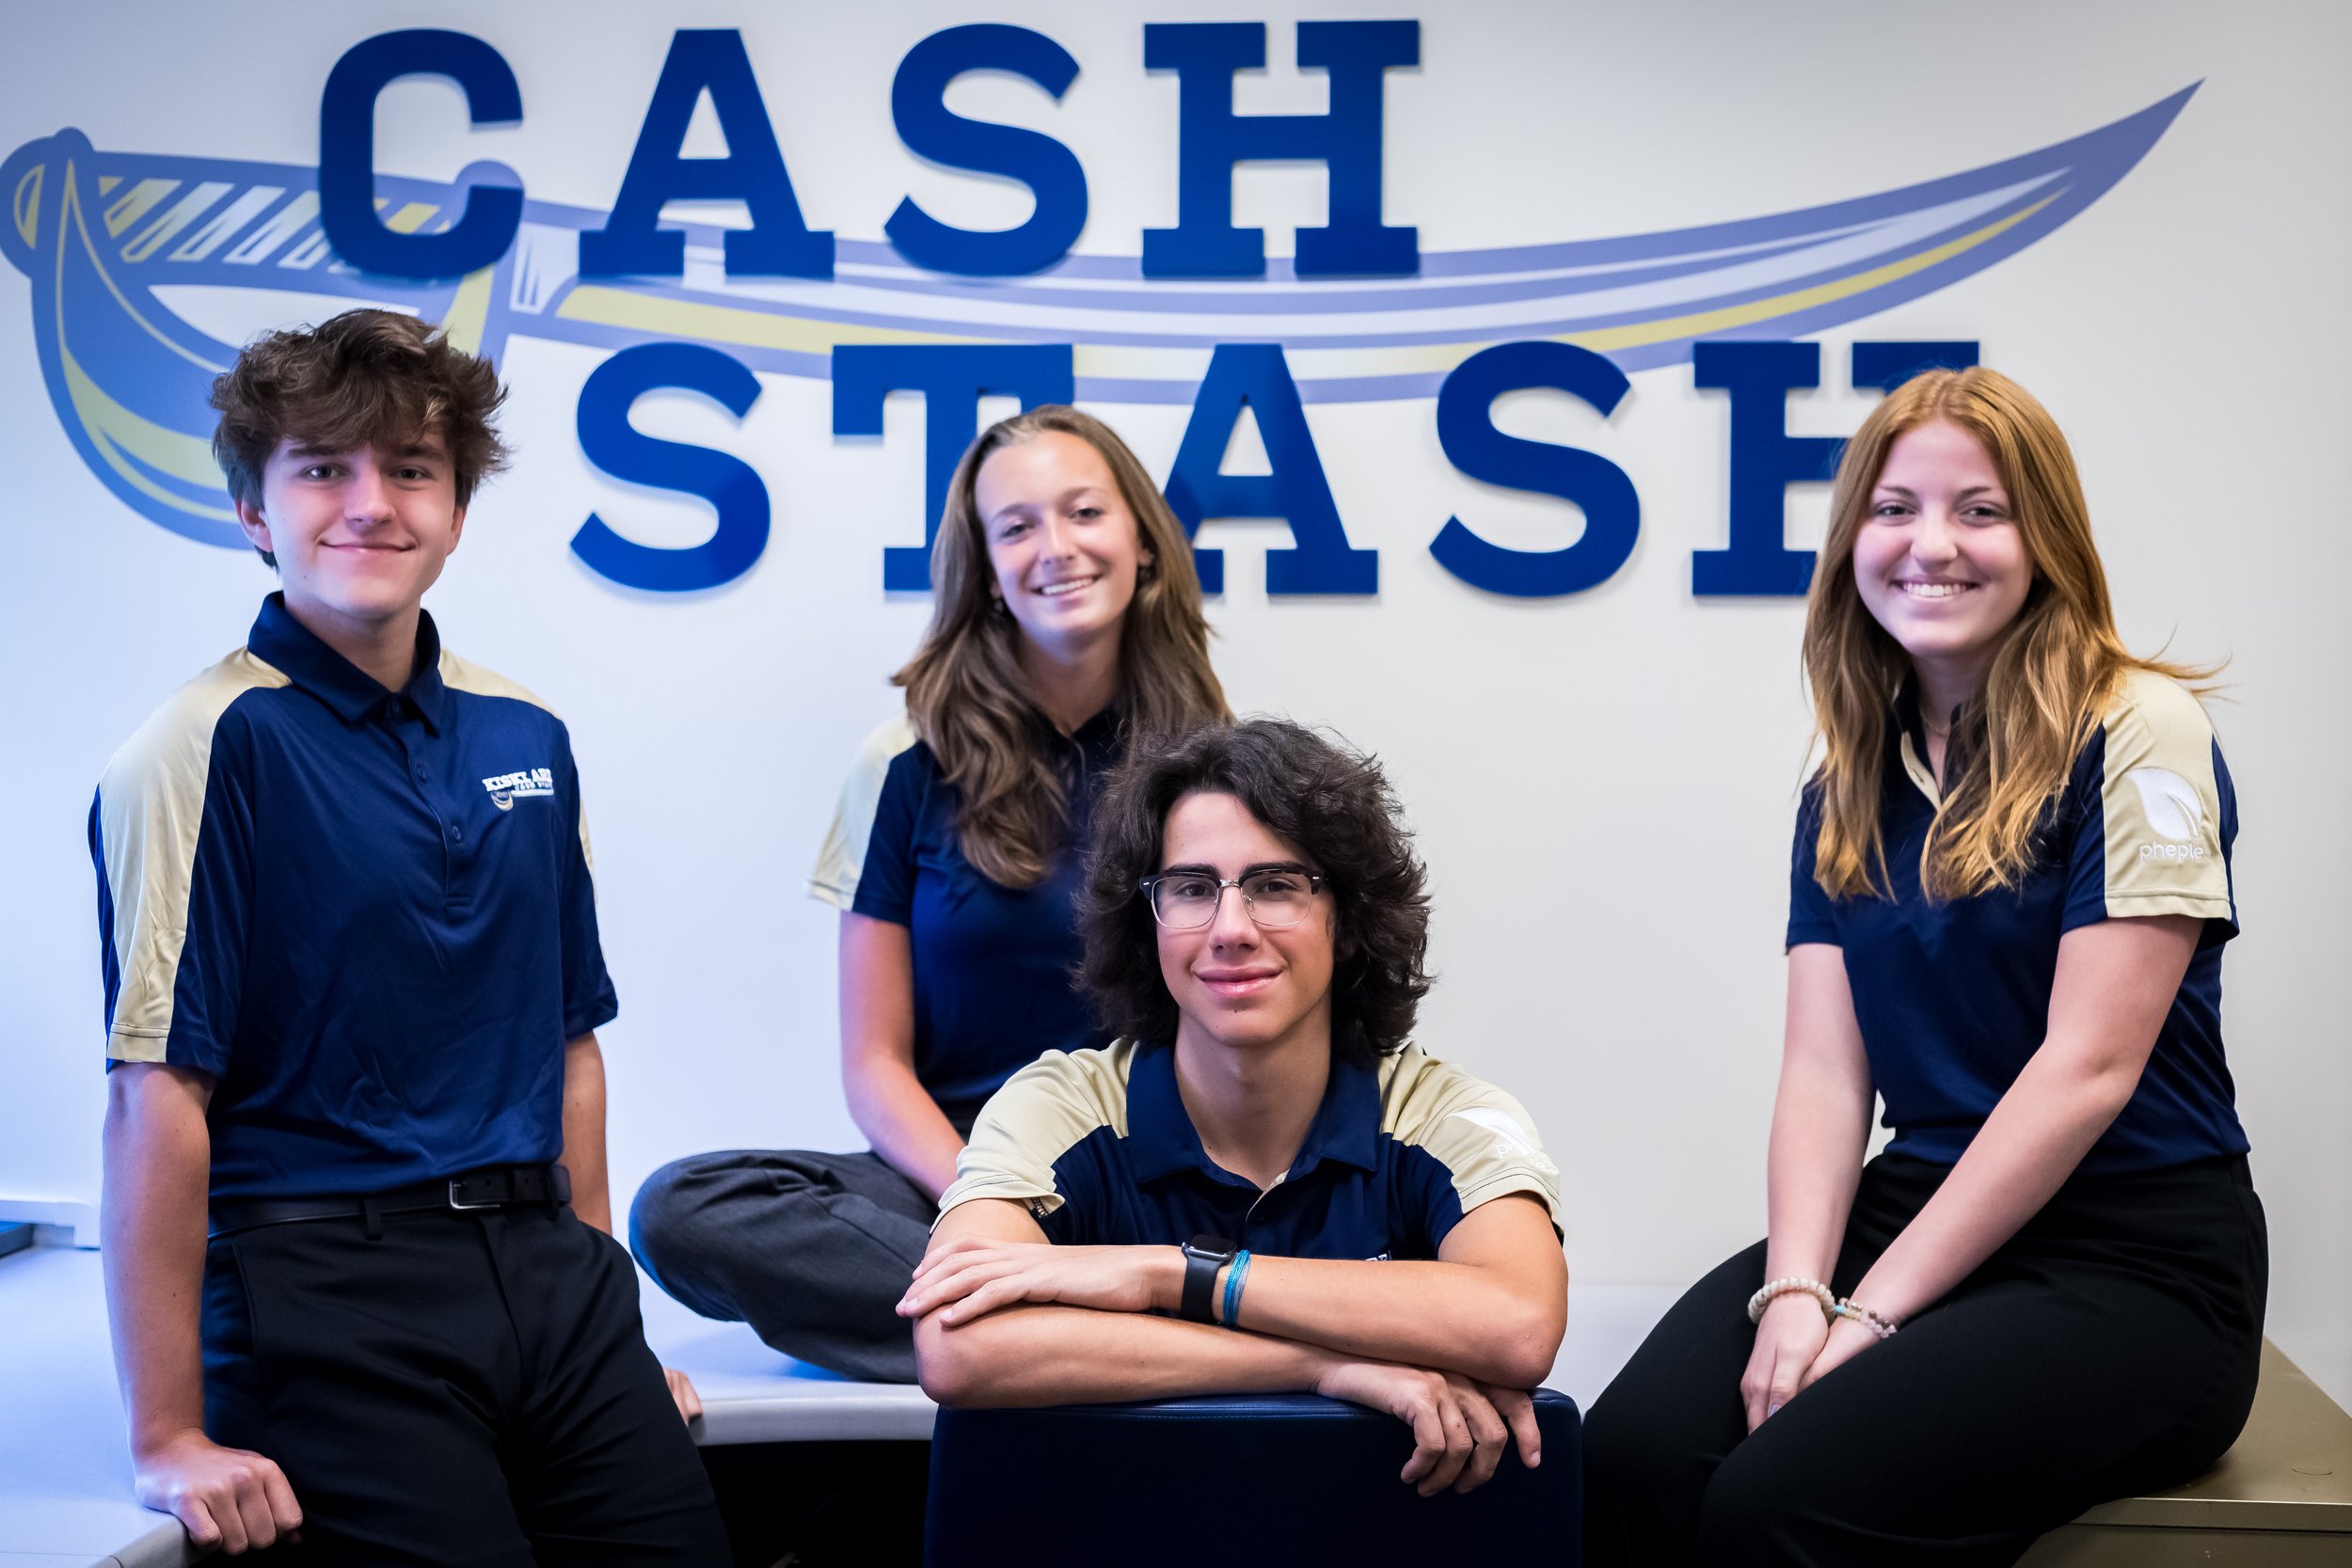 Kiski Area Cash Stash Student Branch at Kiski Area High School